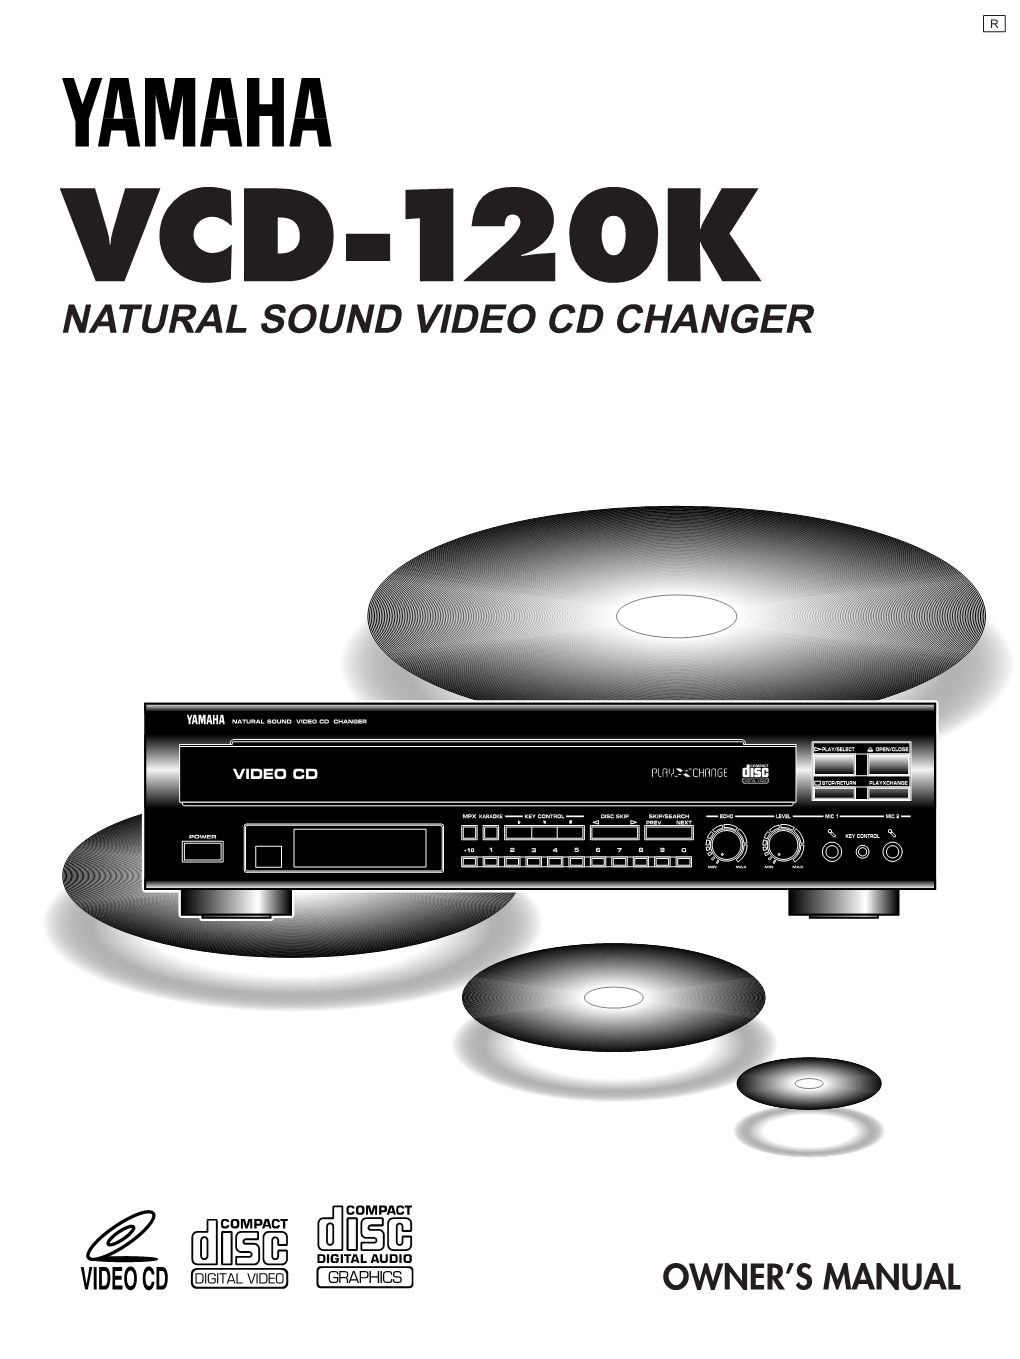 Natural Sound Video Cd Changer